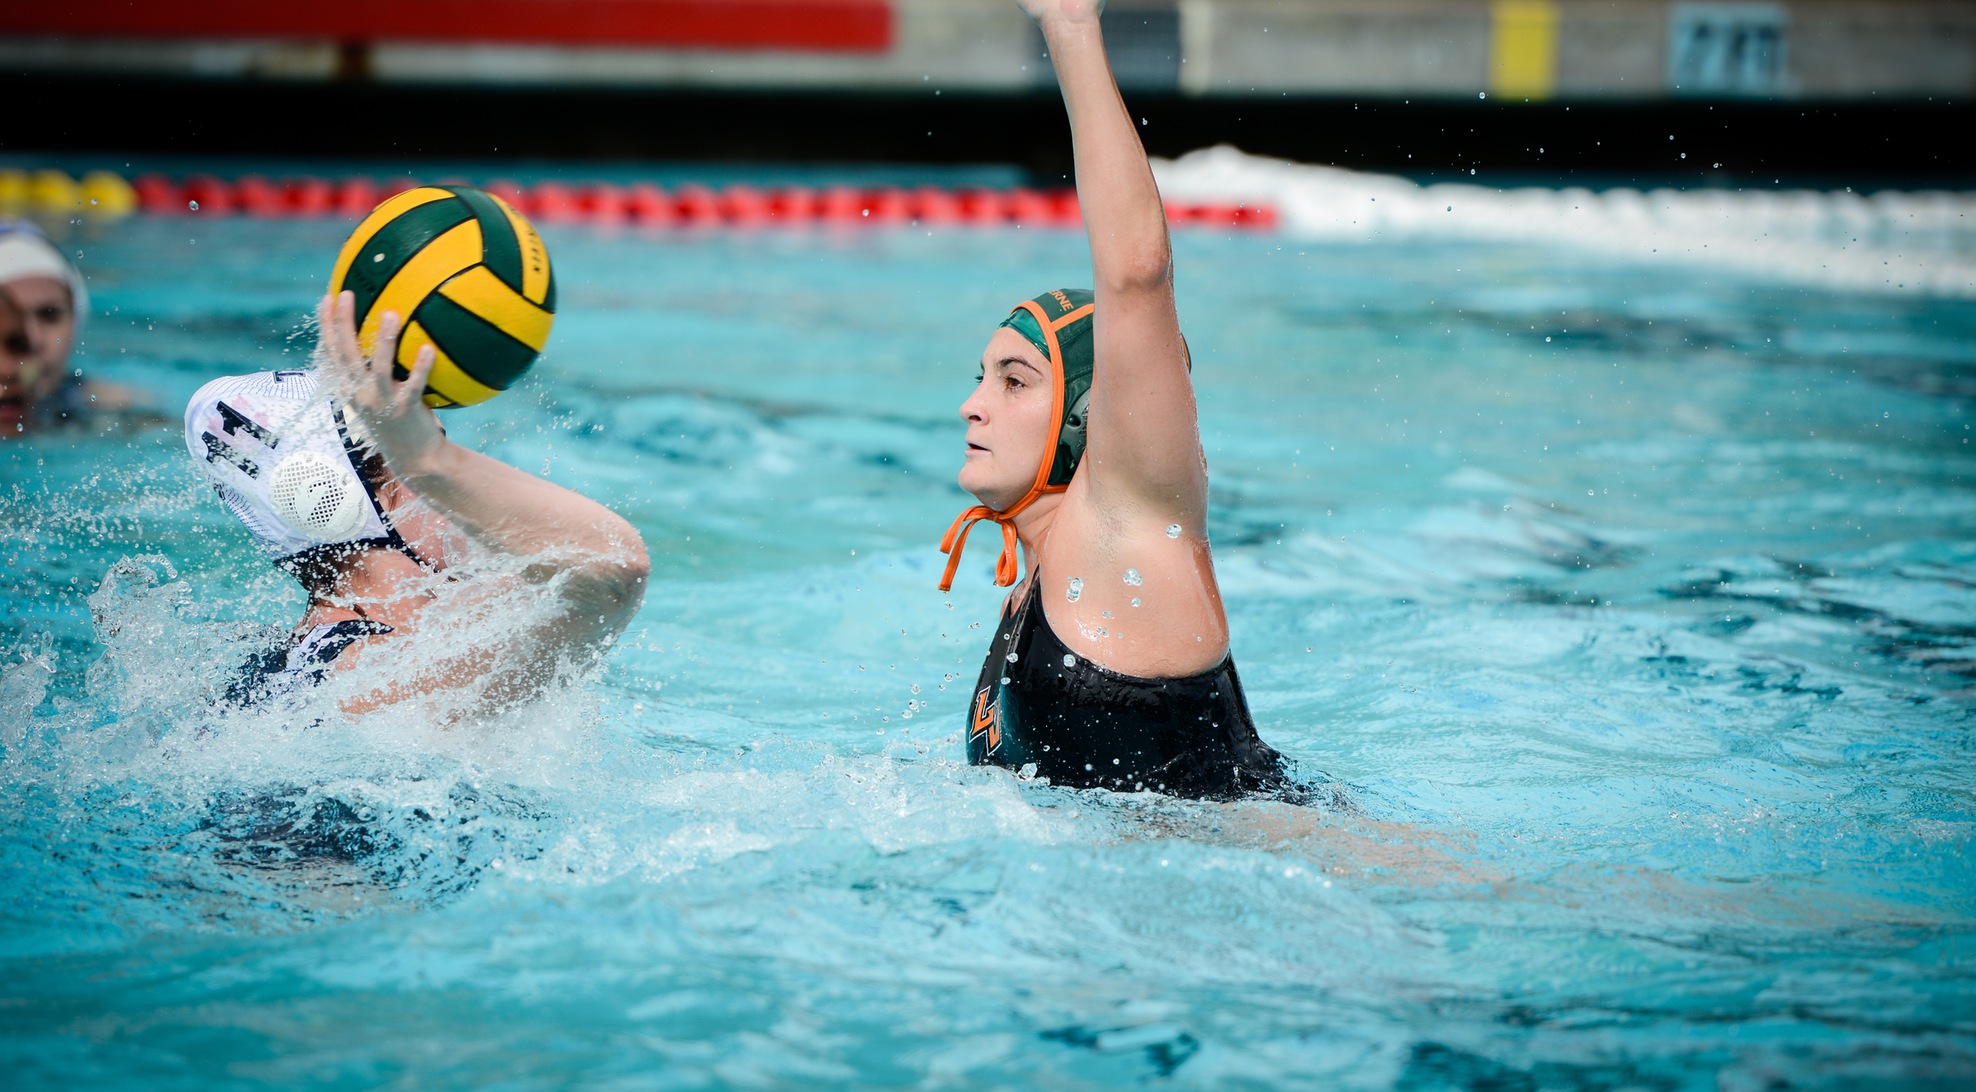 Women's Water polo tops Toronto 11-5